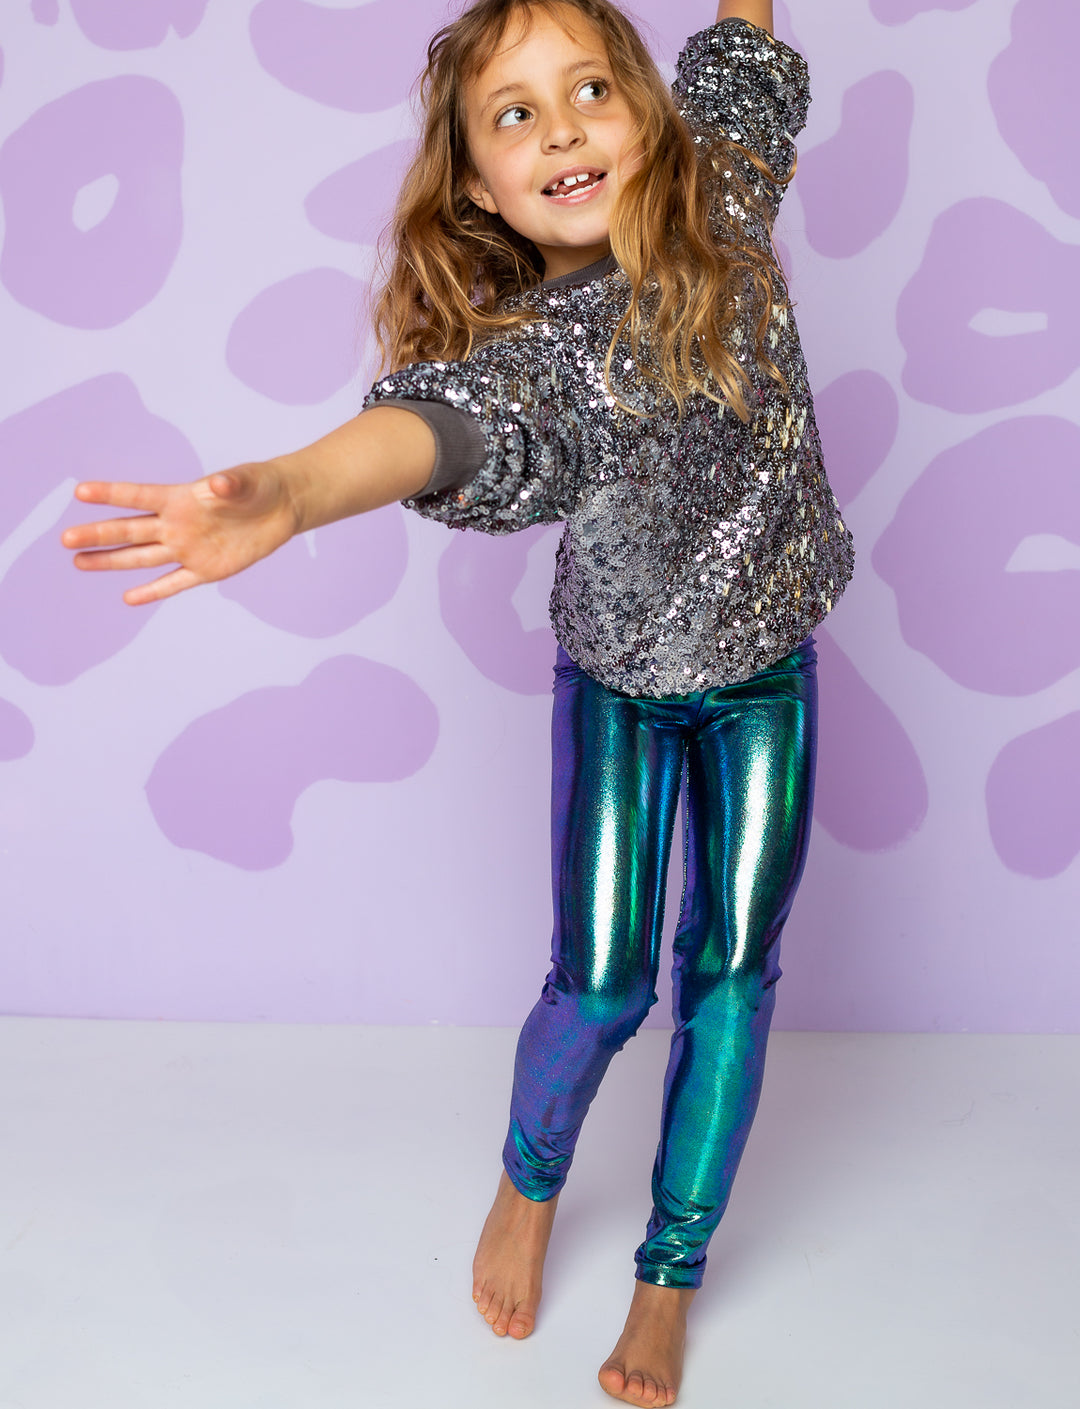 US Kids Girl Metallic Leggings Stretchy Shiny Pants Party Dance Dancing  Leggings